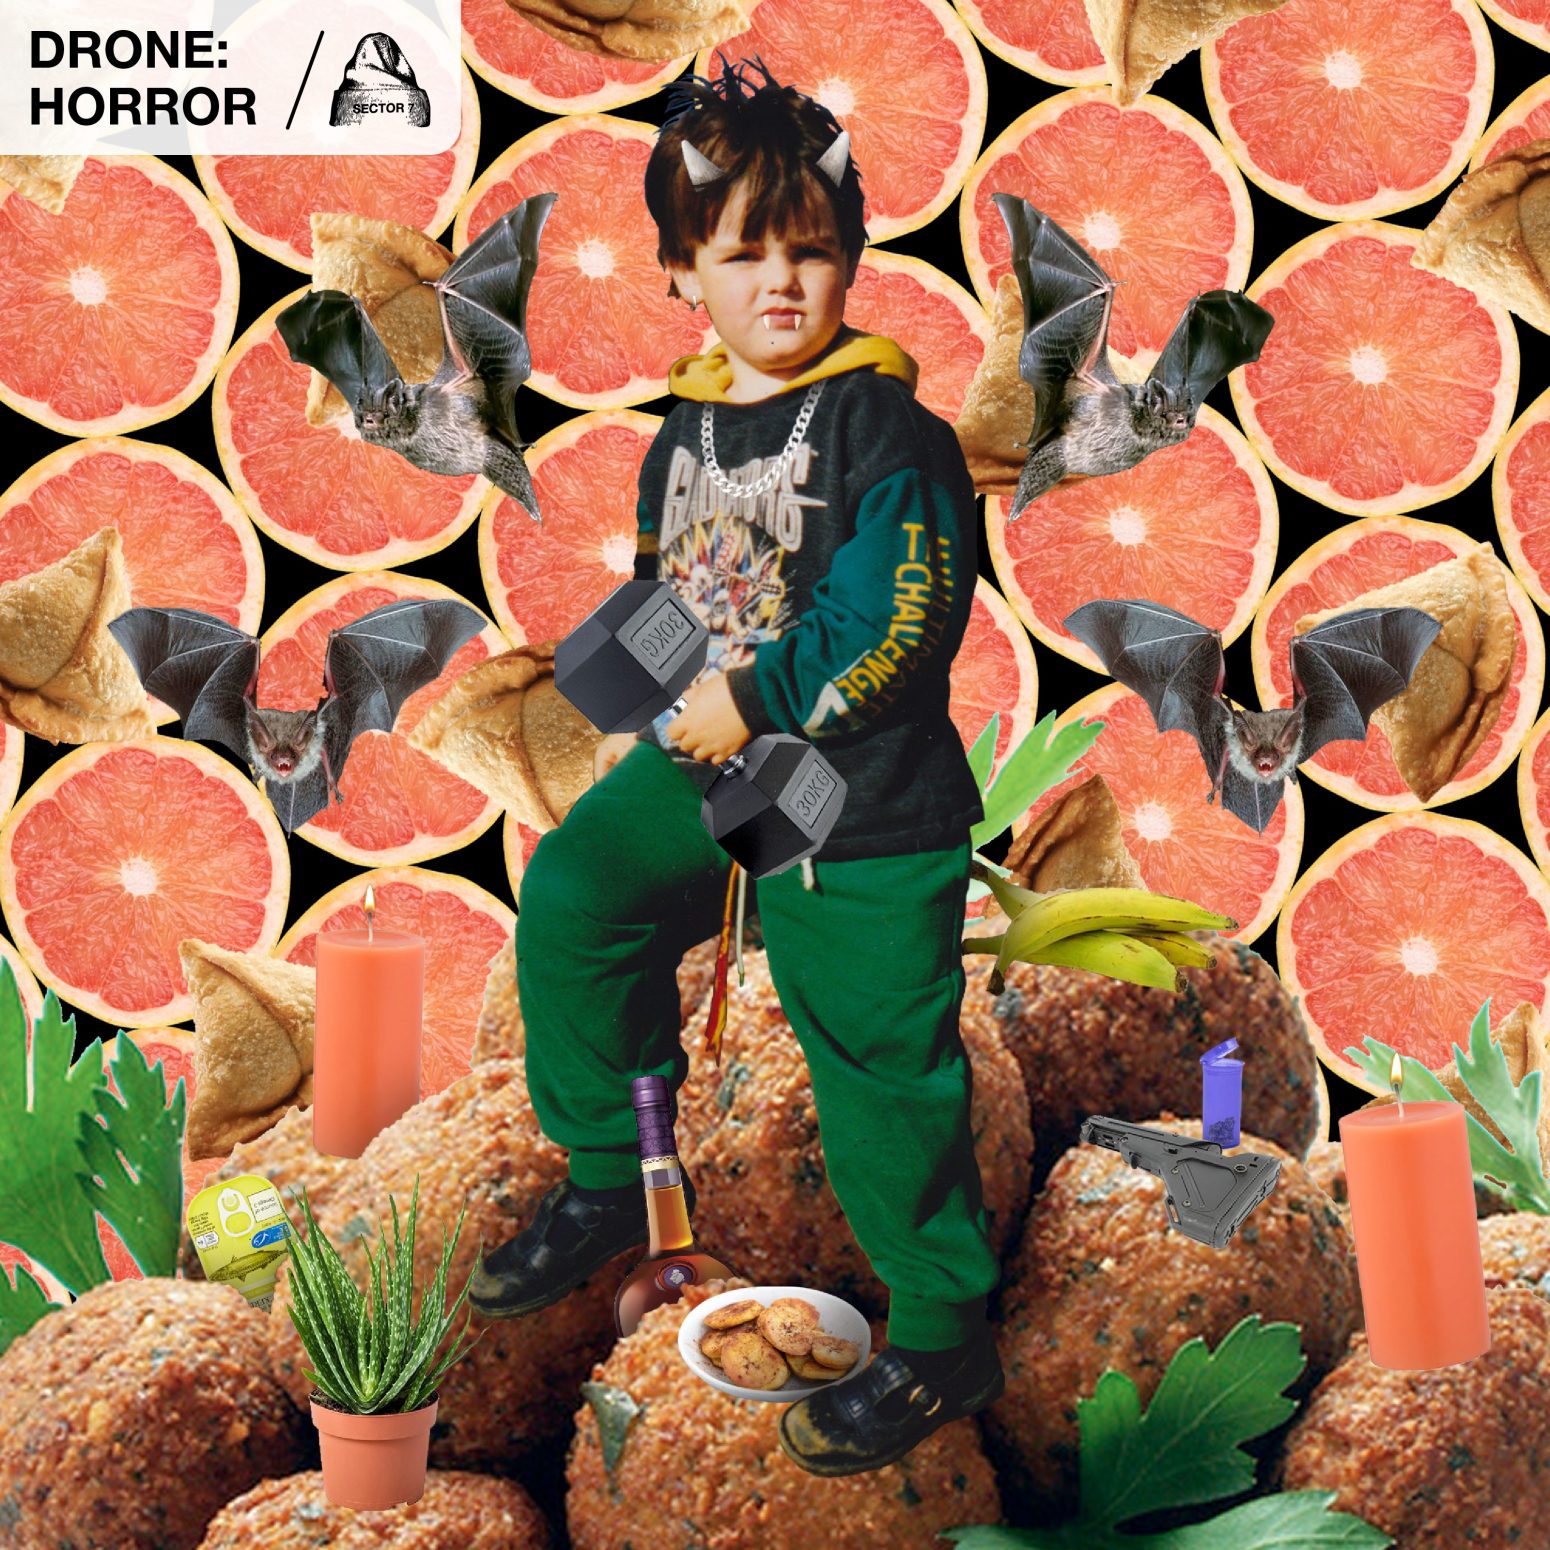 Drone - Horror